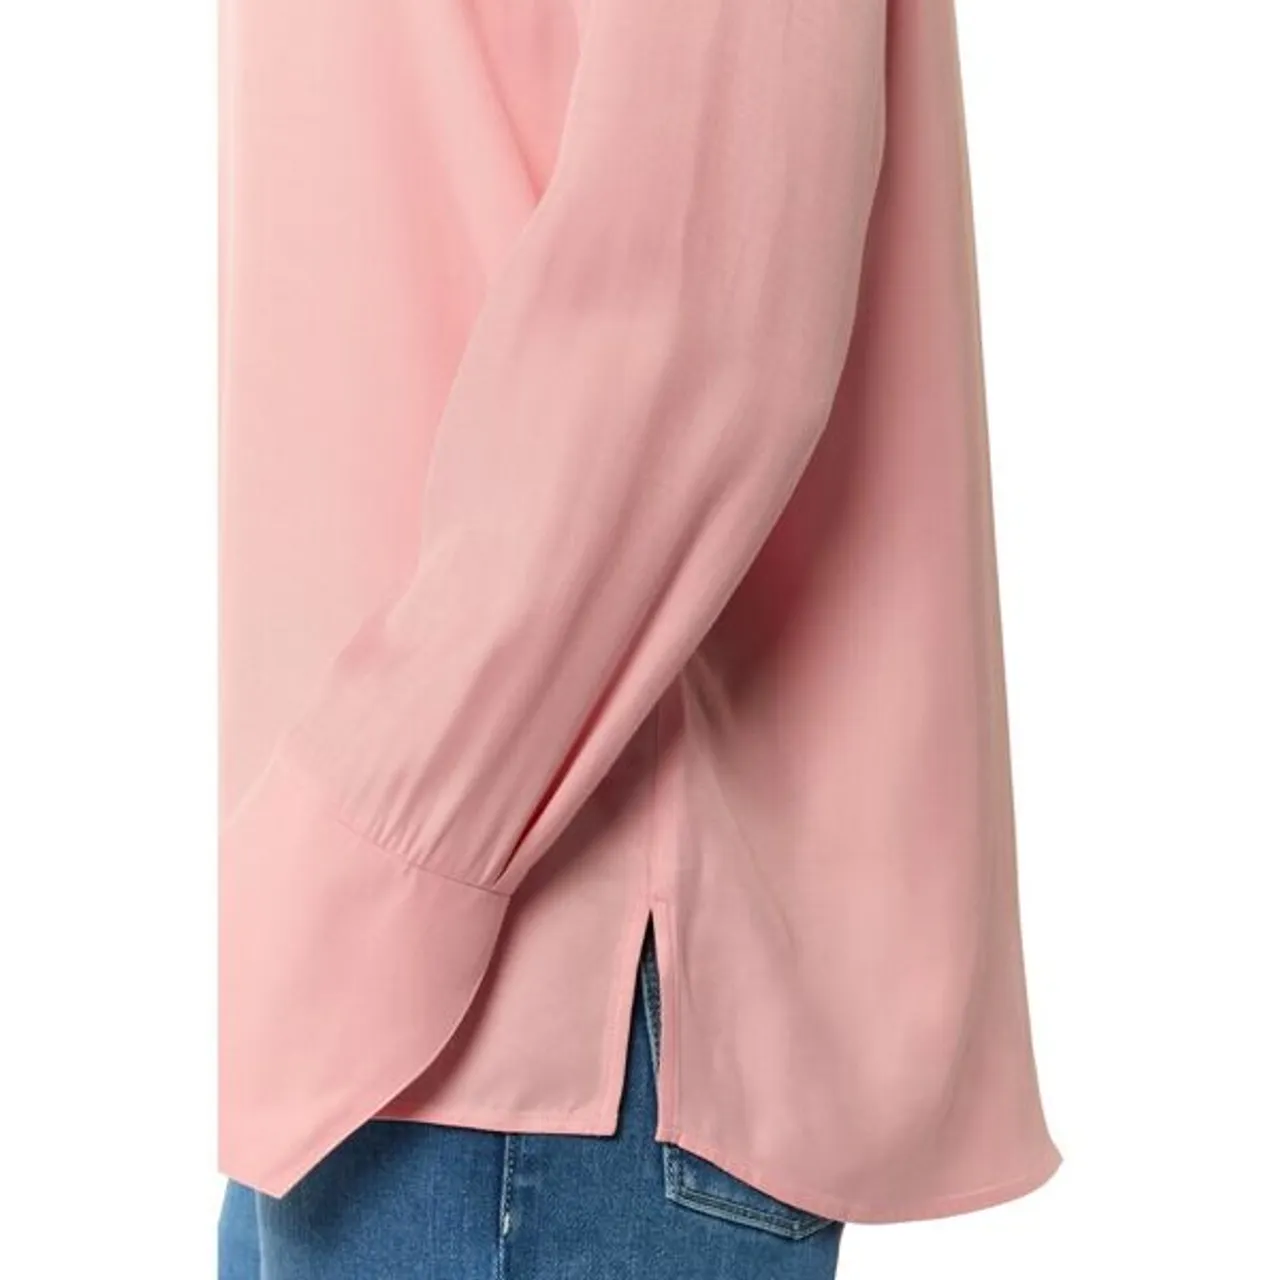 Langarmbluse COMMA Gr. 36, rosa (dusty rose) Damen Blusen langarm mit V-Ausschnitt und Ziernaht an den Ärmeln